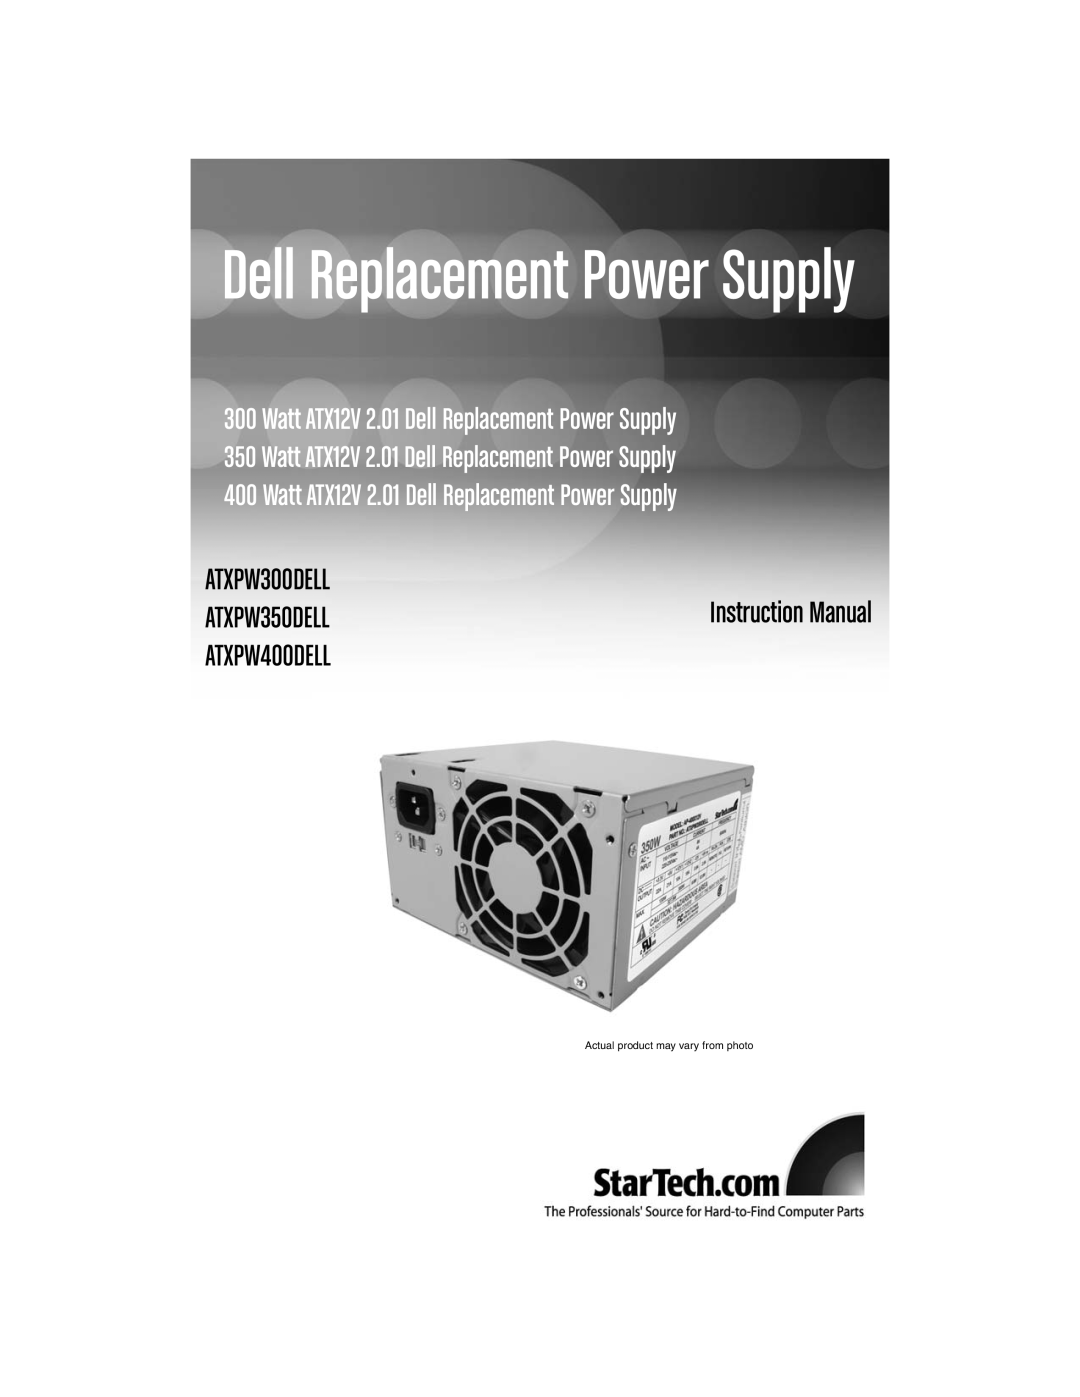 StarTech.com ATXPW300DELL, ATXPW400DELL, ATXPW350DELL instruction manual Watt ATX12V 2.01 Dell Replacement Power Supply 